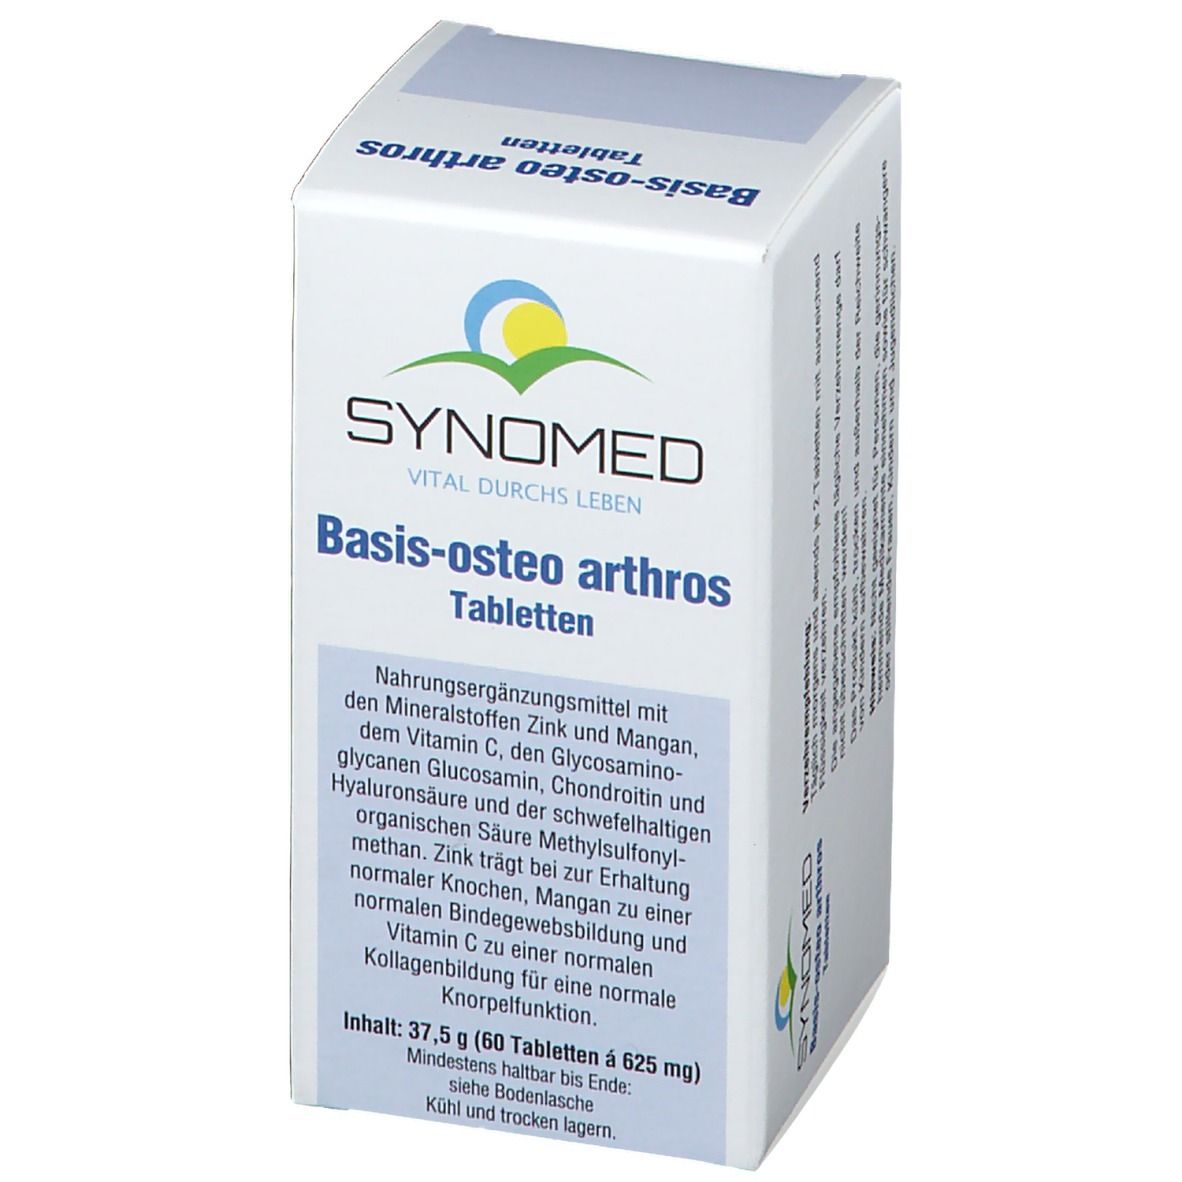 SYNOMED Basis-osteo arthros